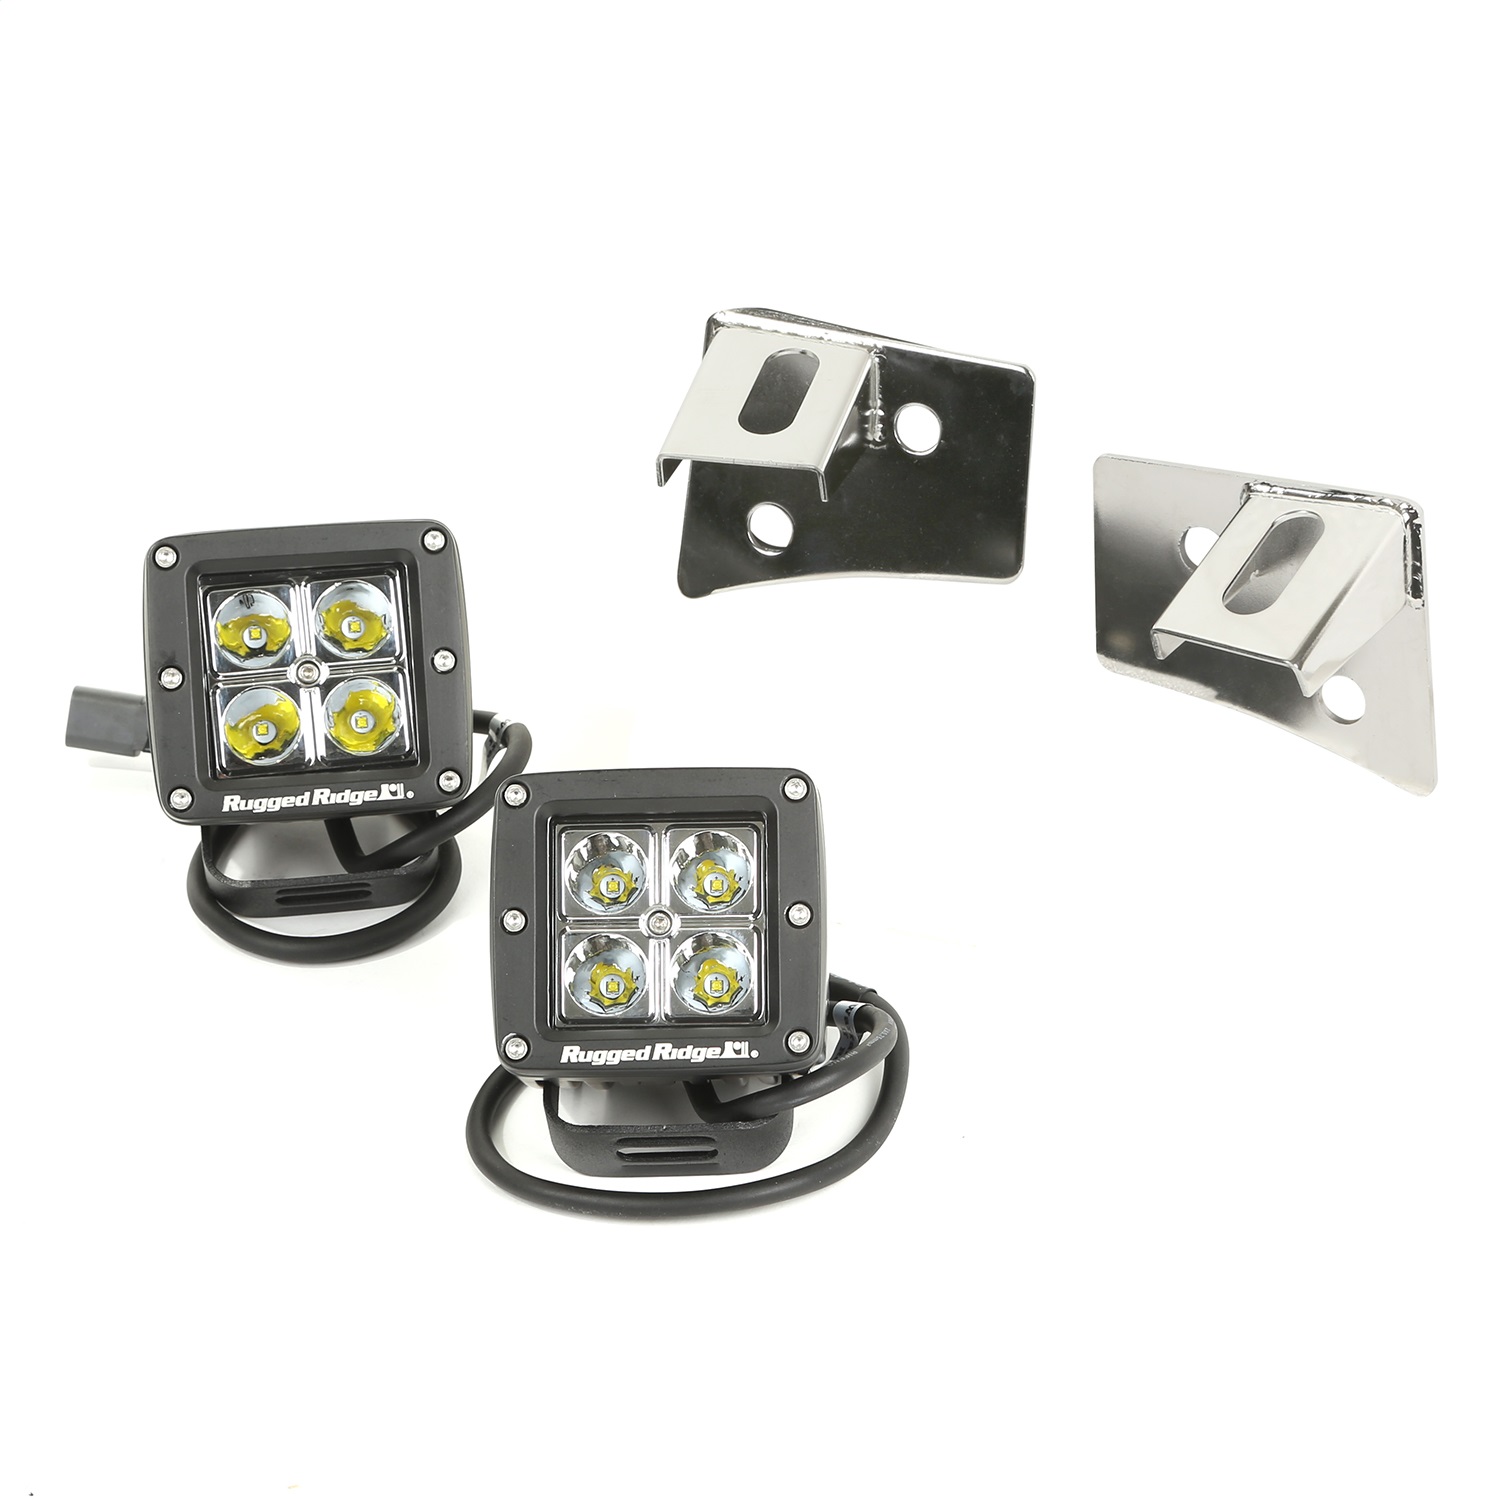 Rugged Ridge 11028.10 Windshield Bracket LED Light Kit Fits 07-18 Wrangler (JK)